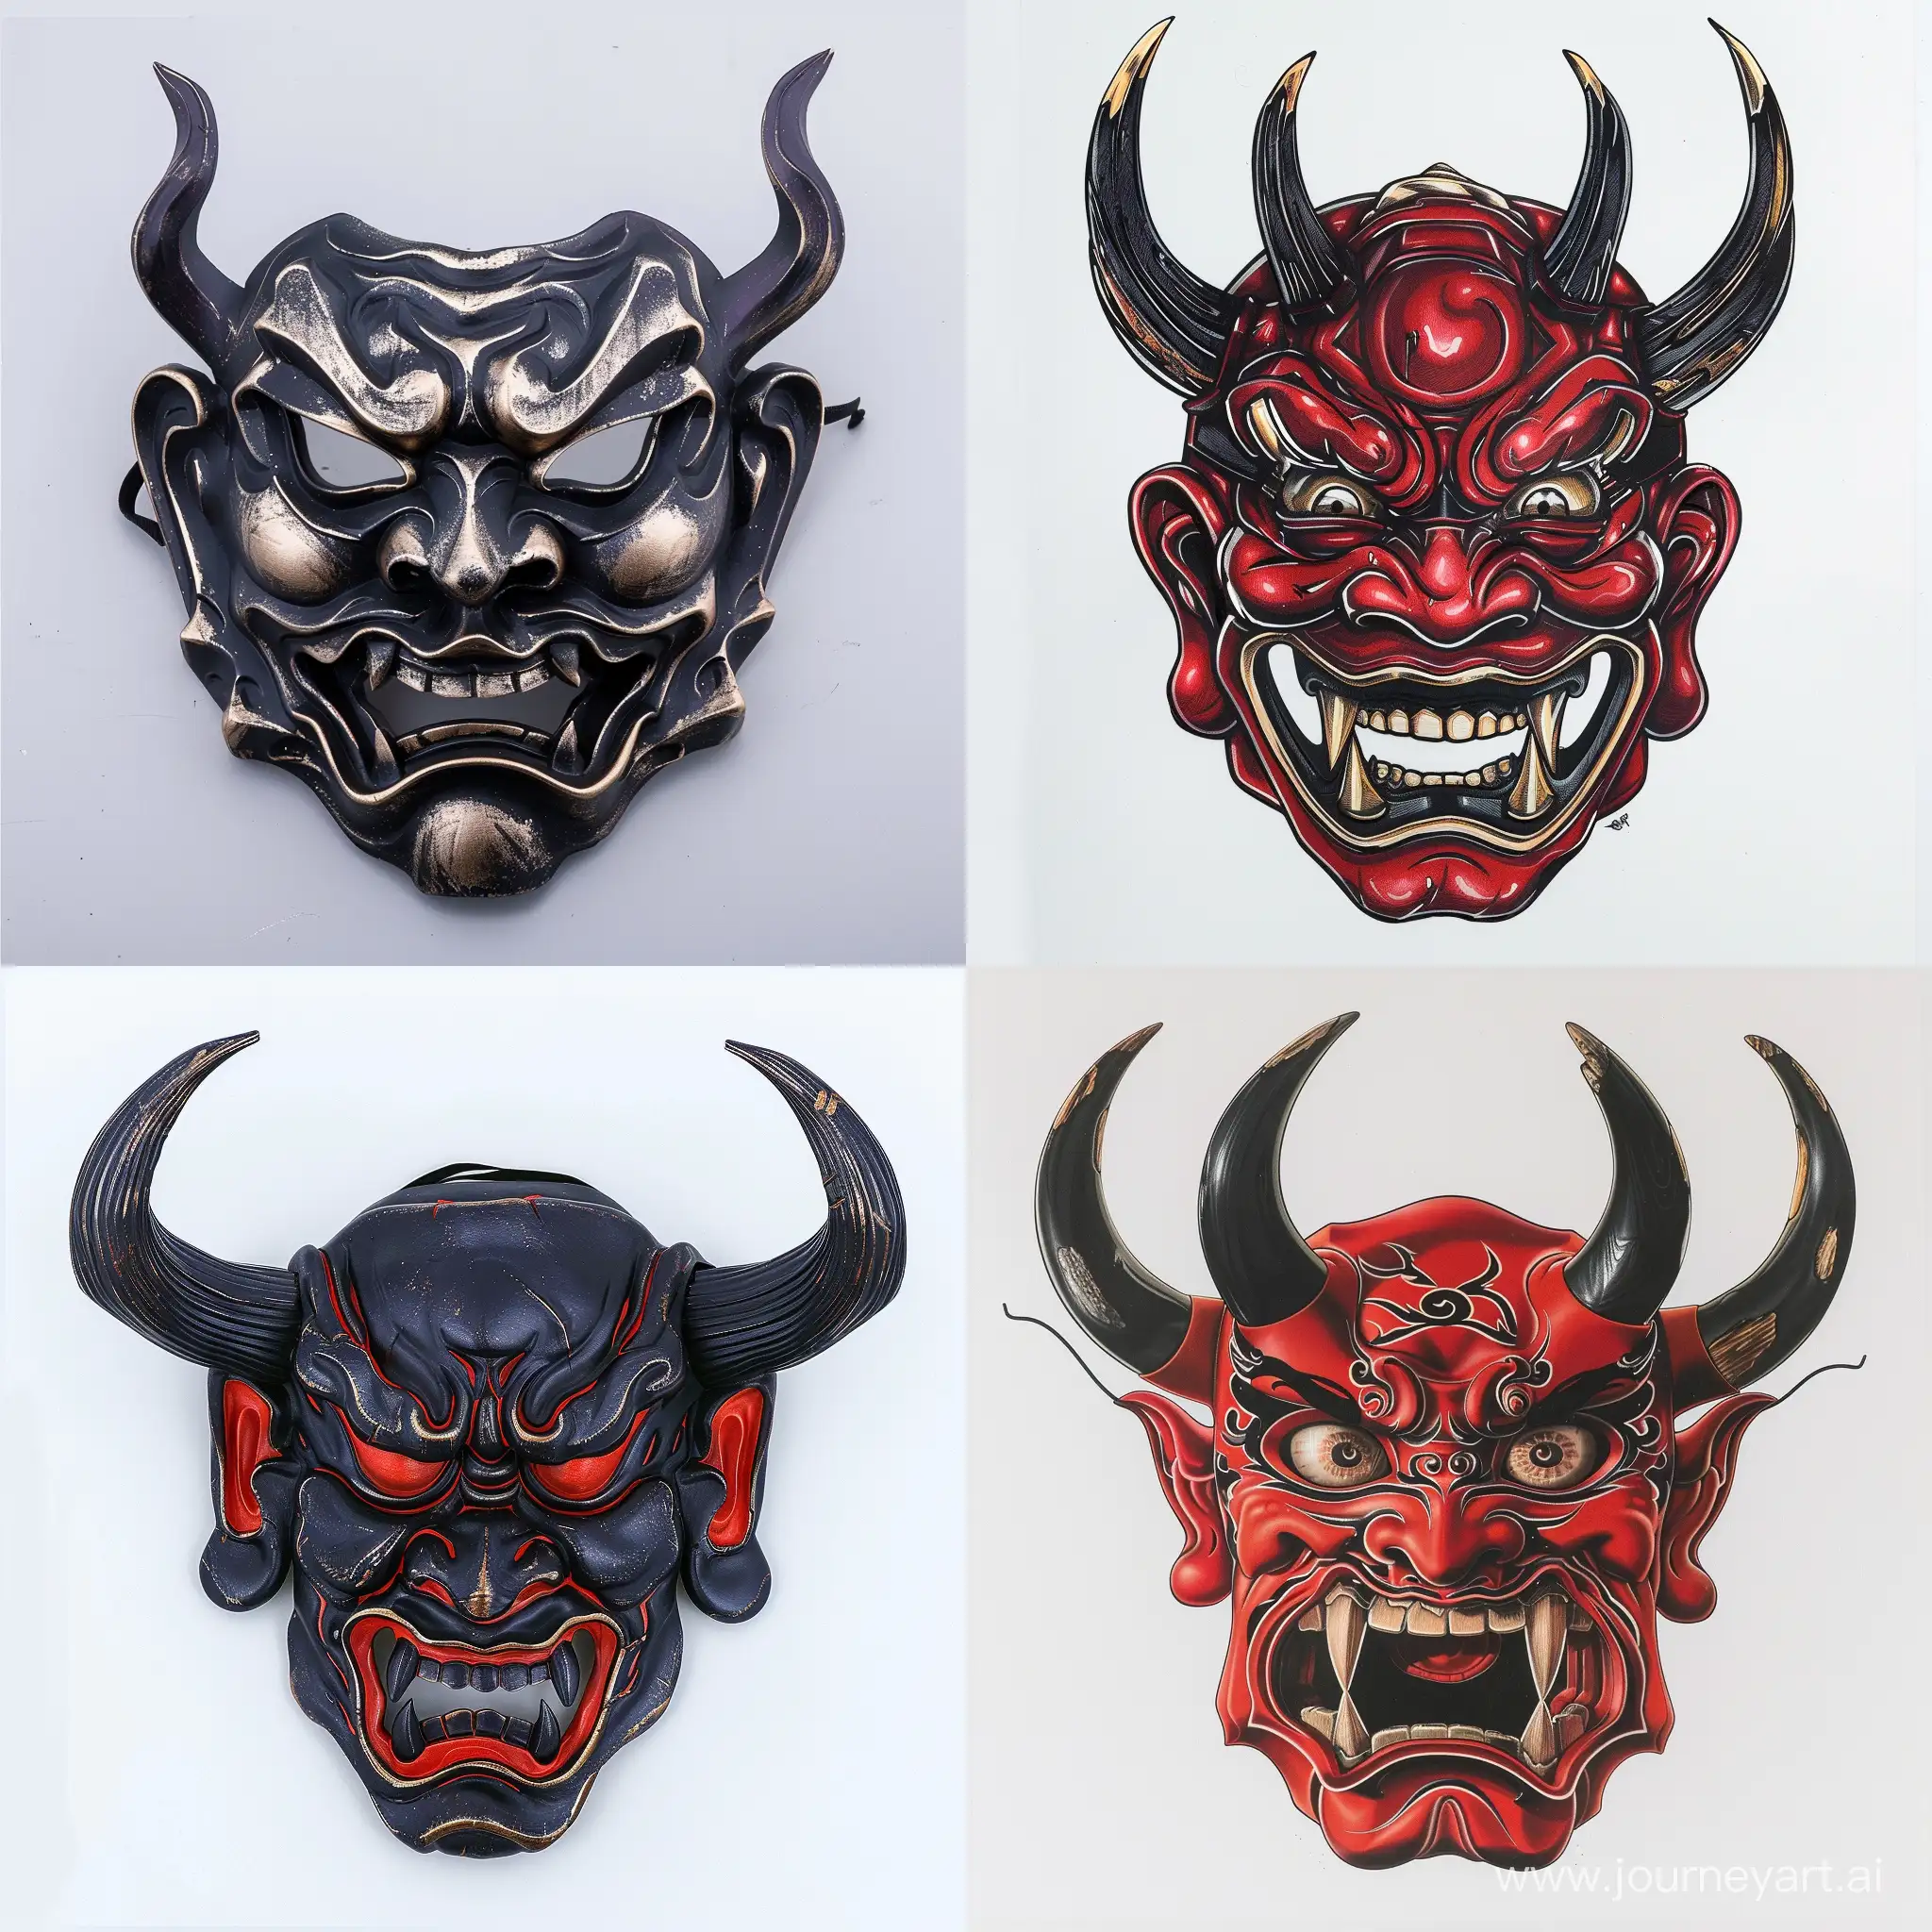 Funny Japanese demon mask, on a white background, art